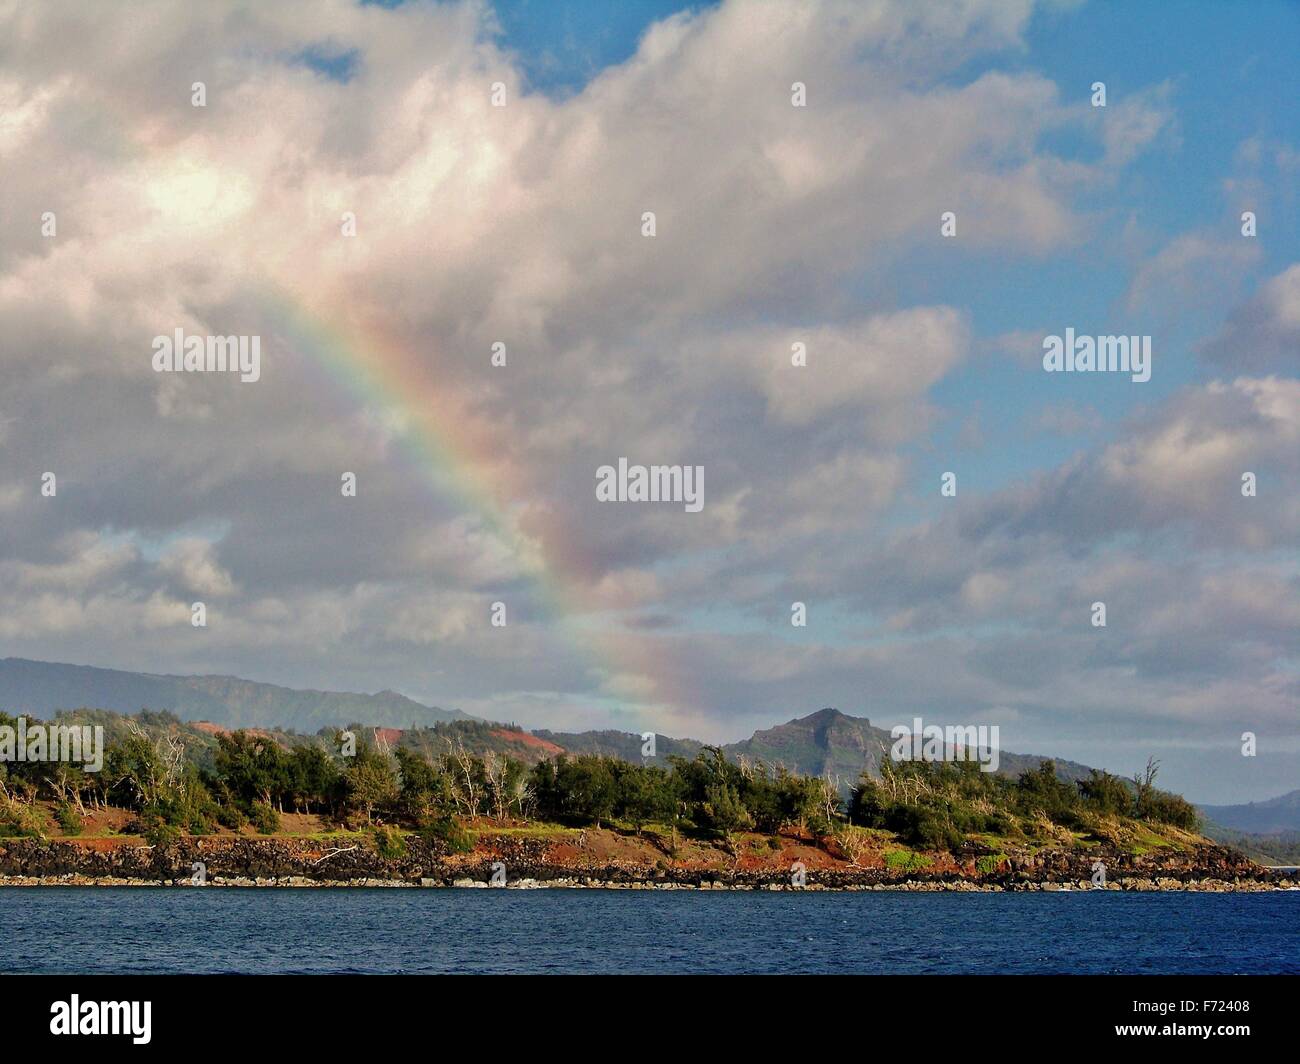 Hawaiian rainbow over mountains and sea Stock Photo